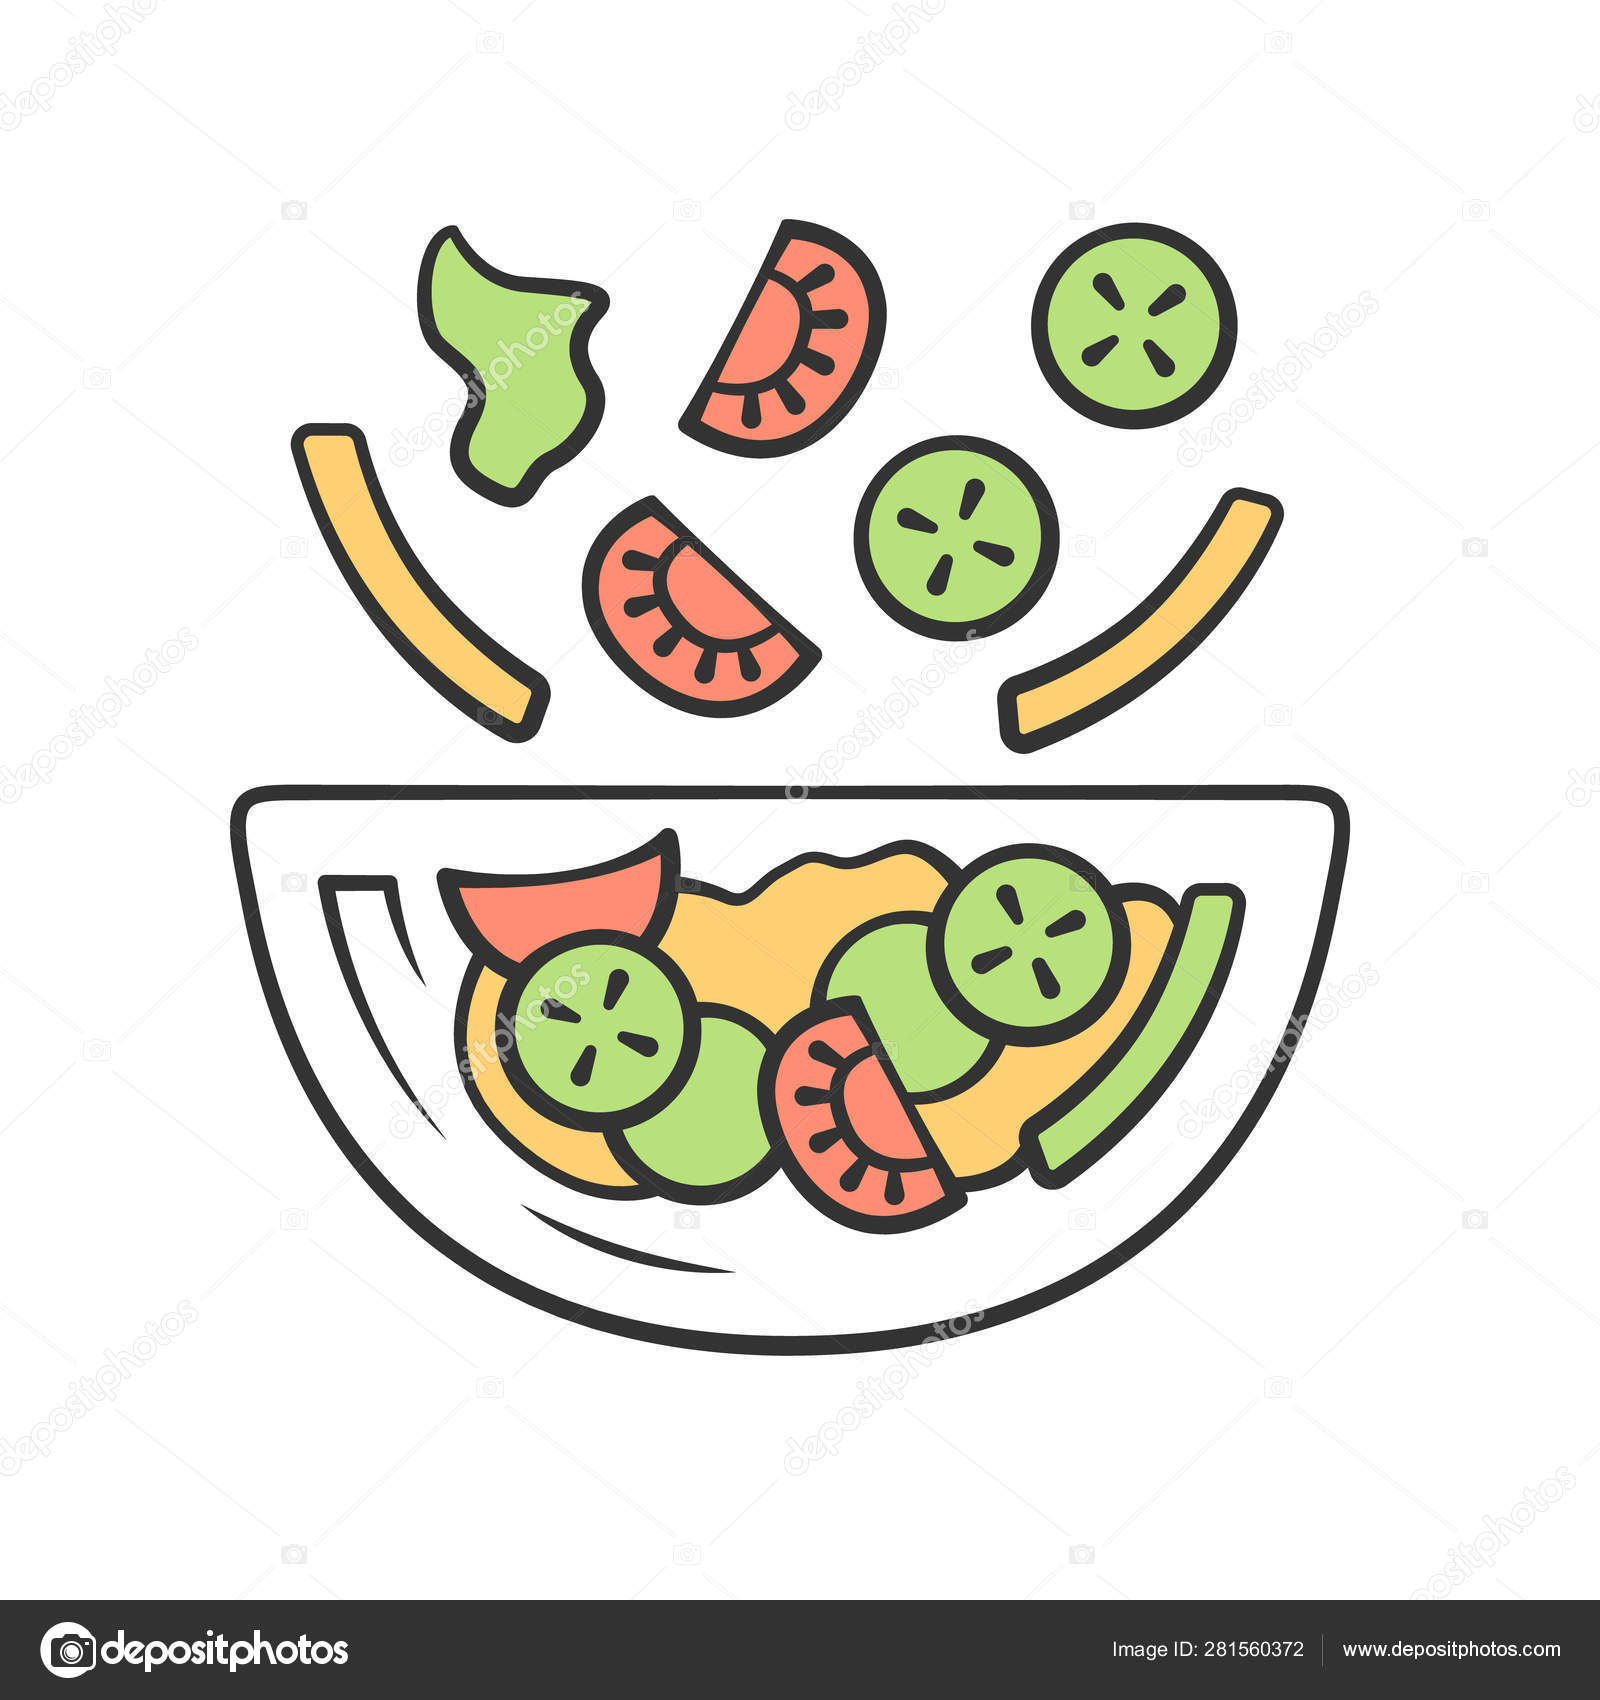 Balanced Diet Diagram easy | Diet food chart drawing idea | Balanced diet  food pyramid drawing idea - YouTube